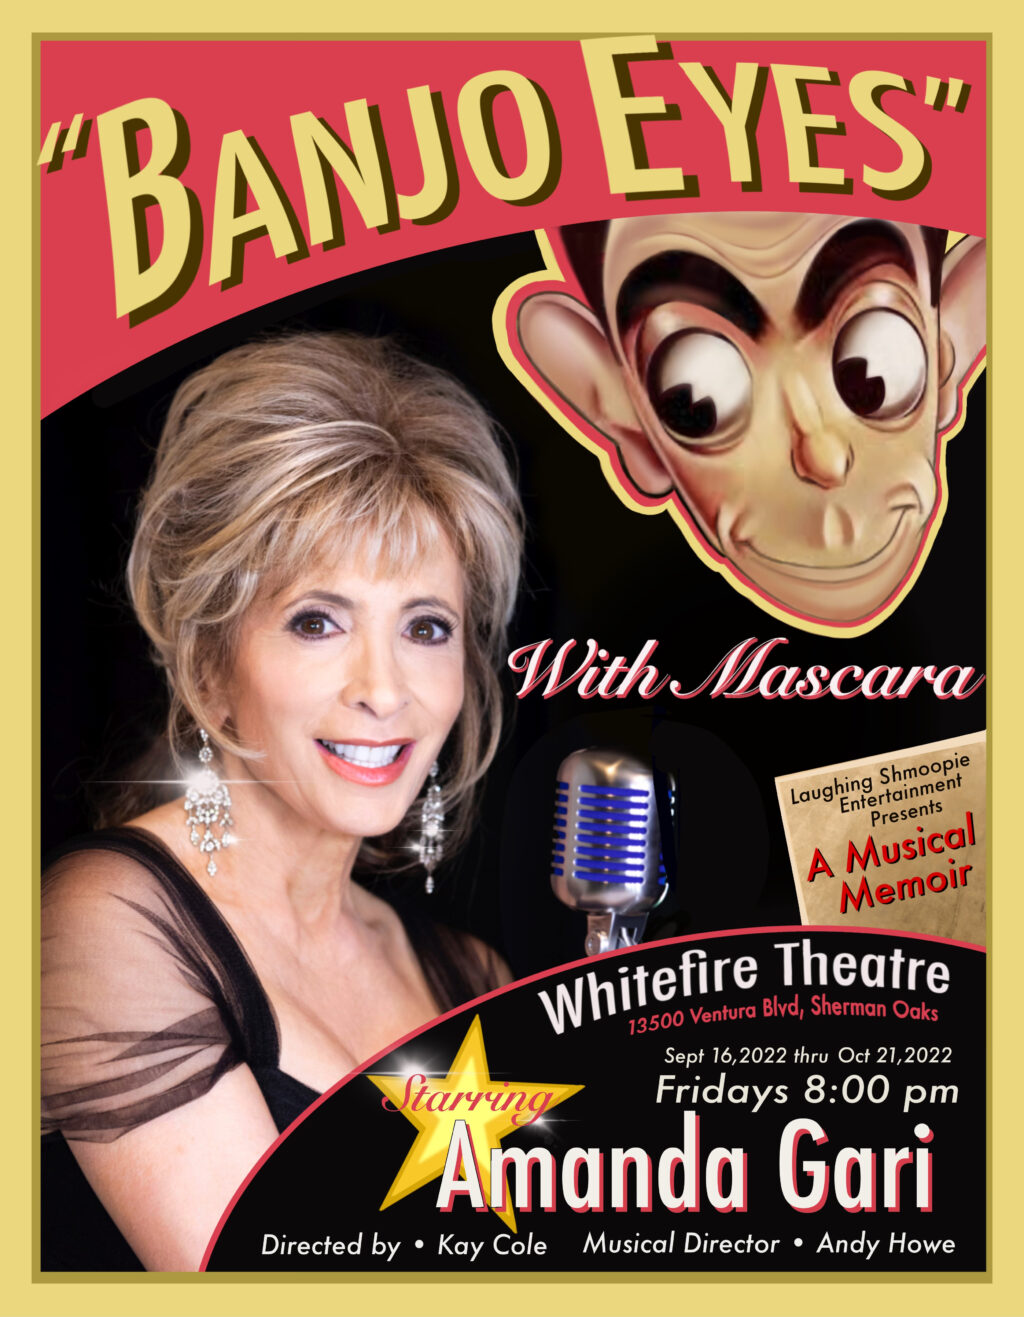 A NoHo Arts theatre review of “Banjo Eyes with Mascara” staring Amanda Gari at the Whitefire Theatre running through October 21.